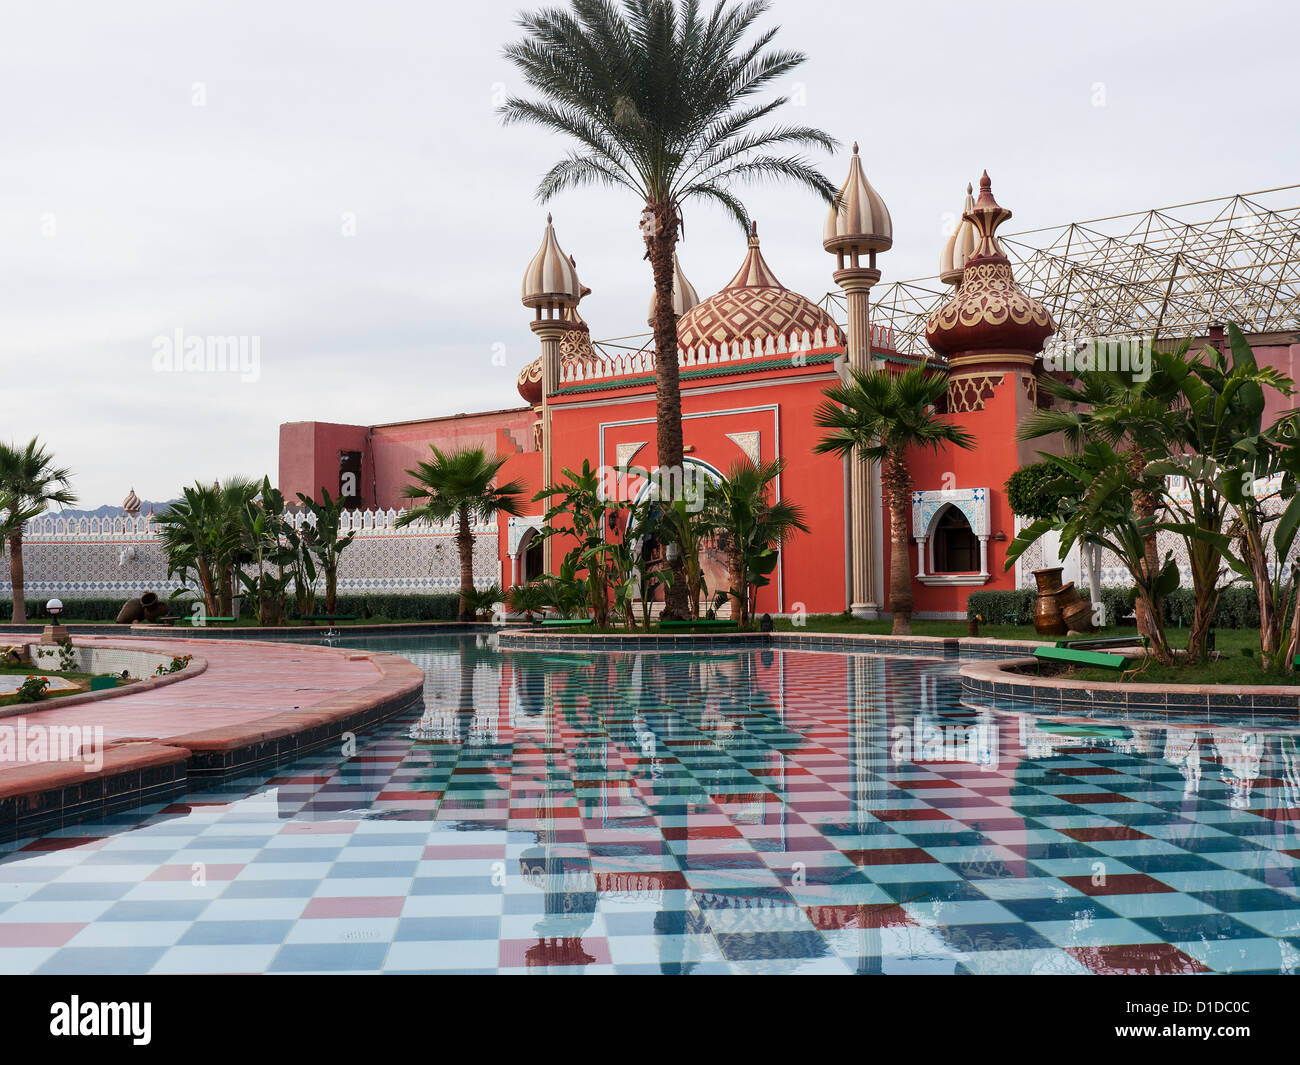 Inside Fantasia, an entertainment centre in Sharm El Sheikh, Egypt Stock Photo